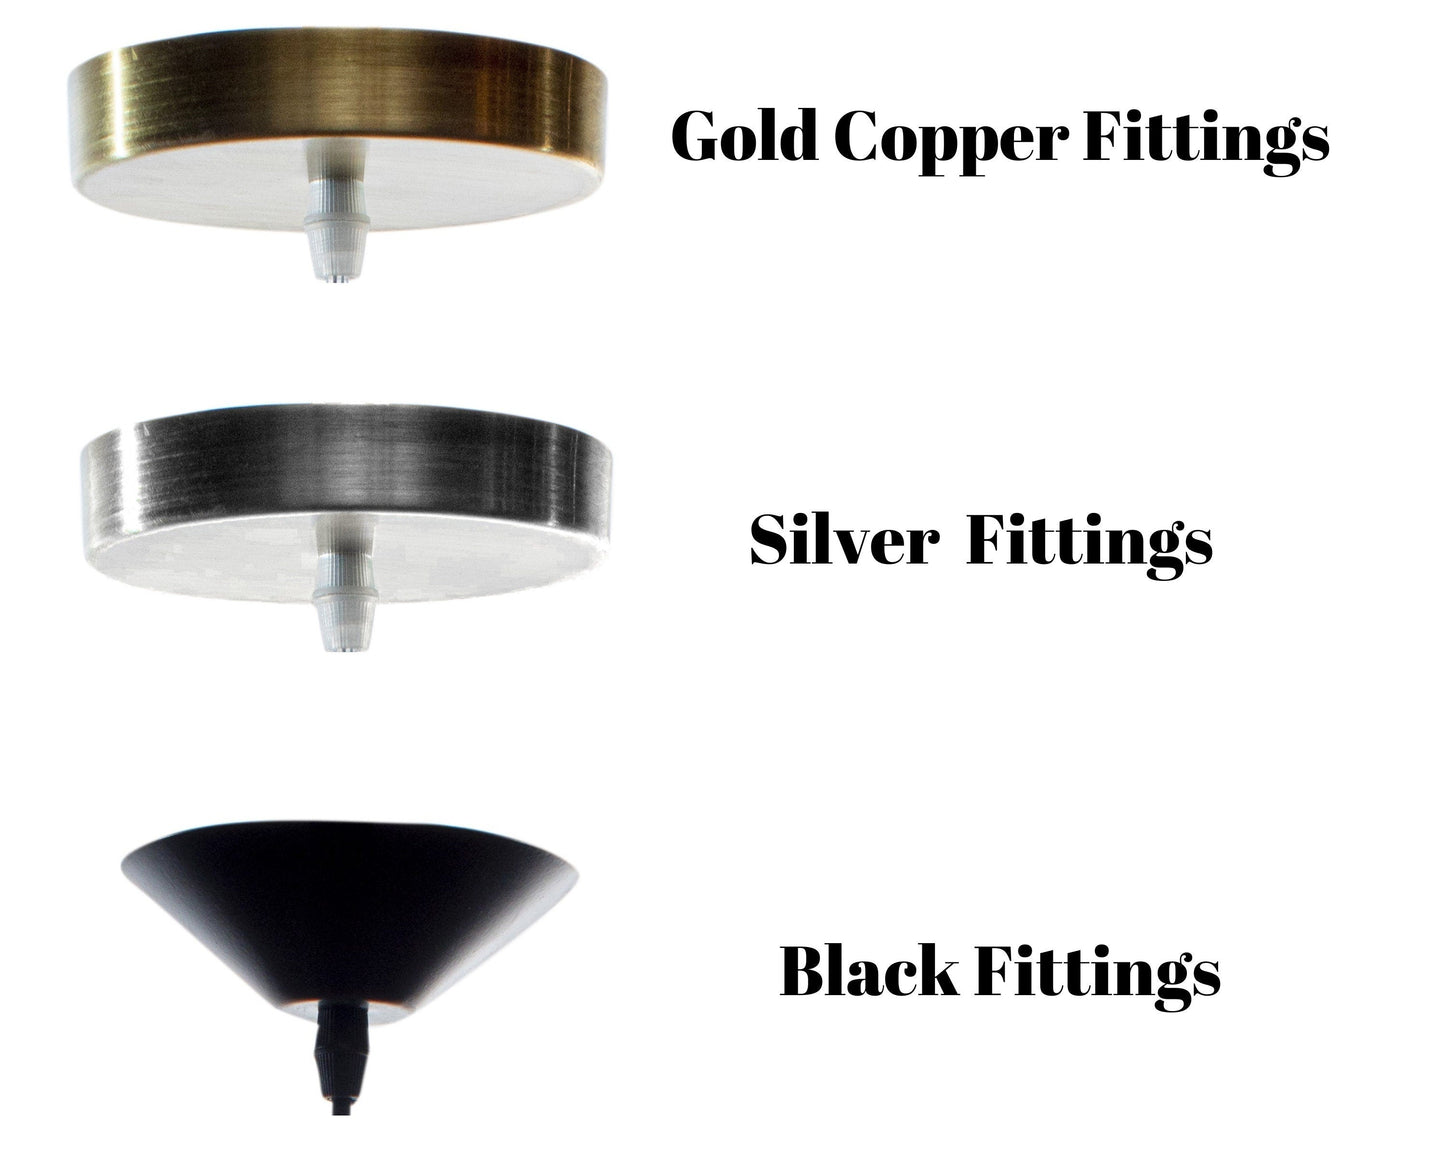 Set of Three Modern pendants light plus ceiling bar